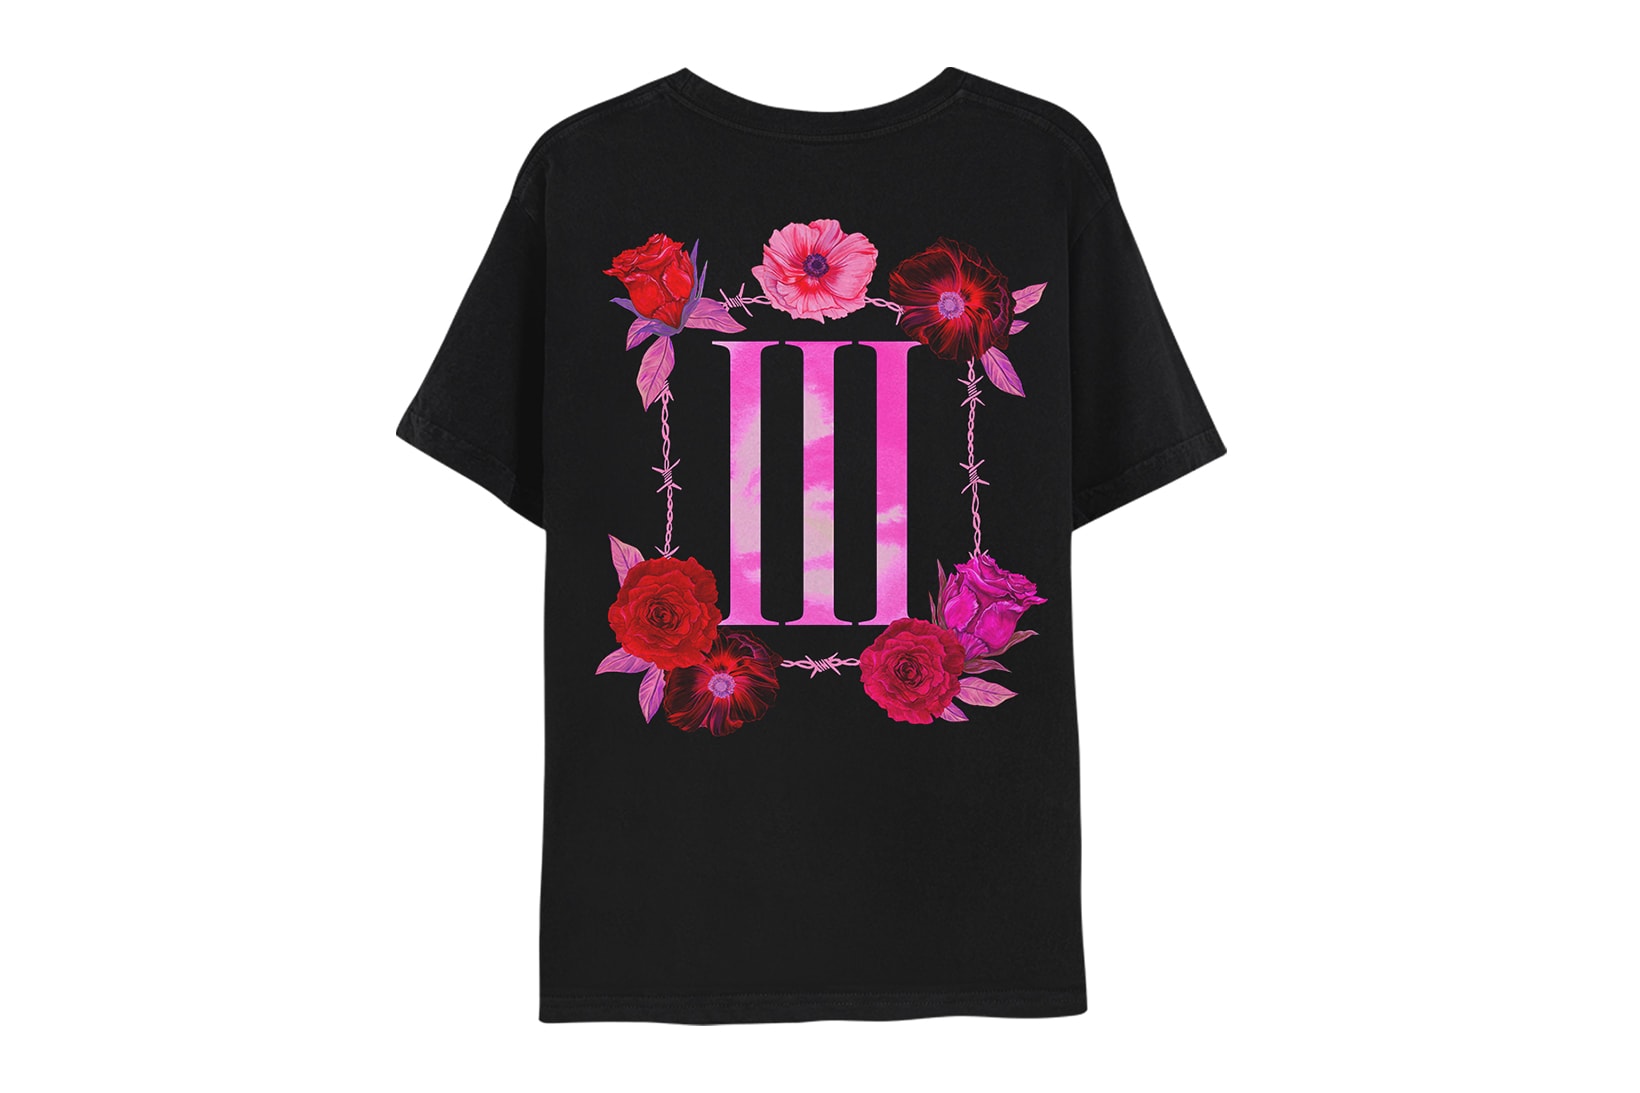 TWICE 4th World Tour Collection Merchandise Outerwear Accessories K-pop T-Shirt Floral Back